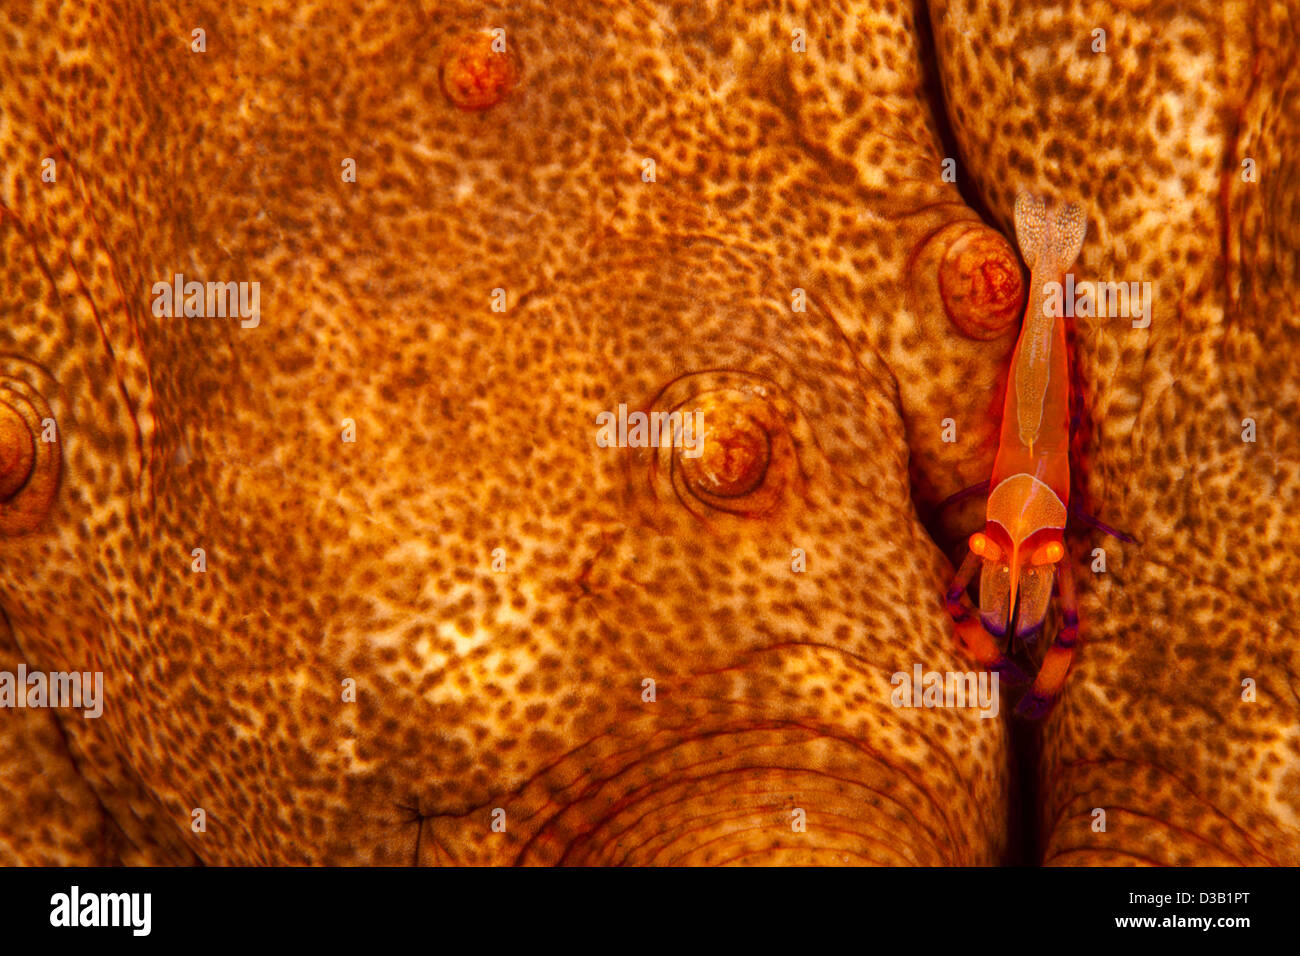 Imperial shrimp, Periclimenes imperator, on an endemic Hawaiian spiky sea cucumber, Stichopus sp. Hawaii. Stock Photo